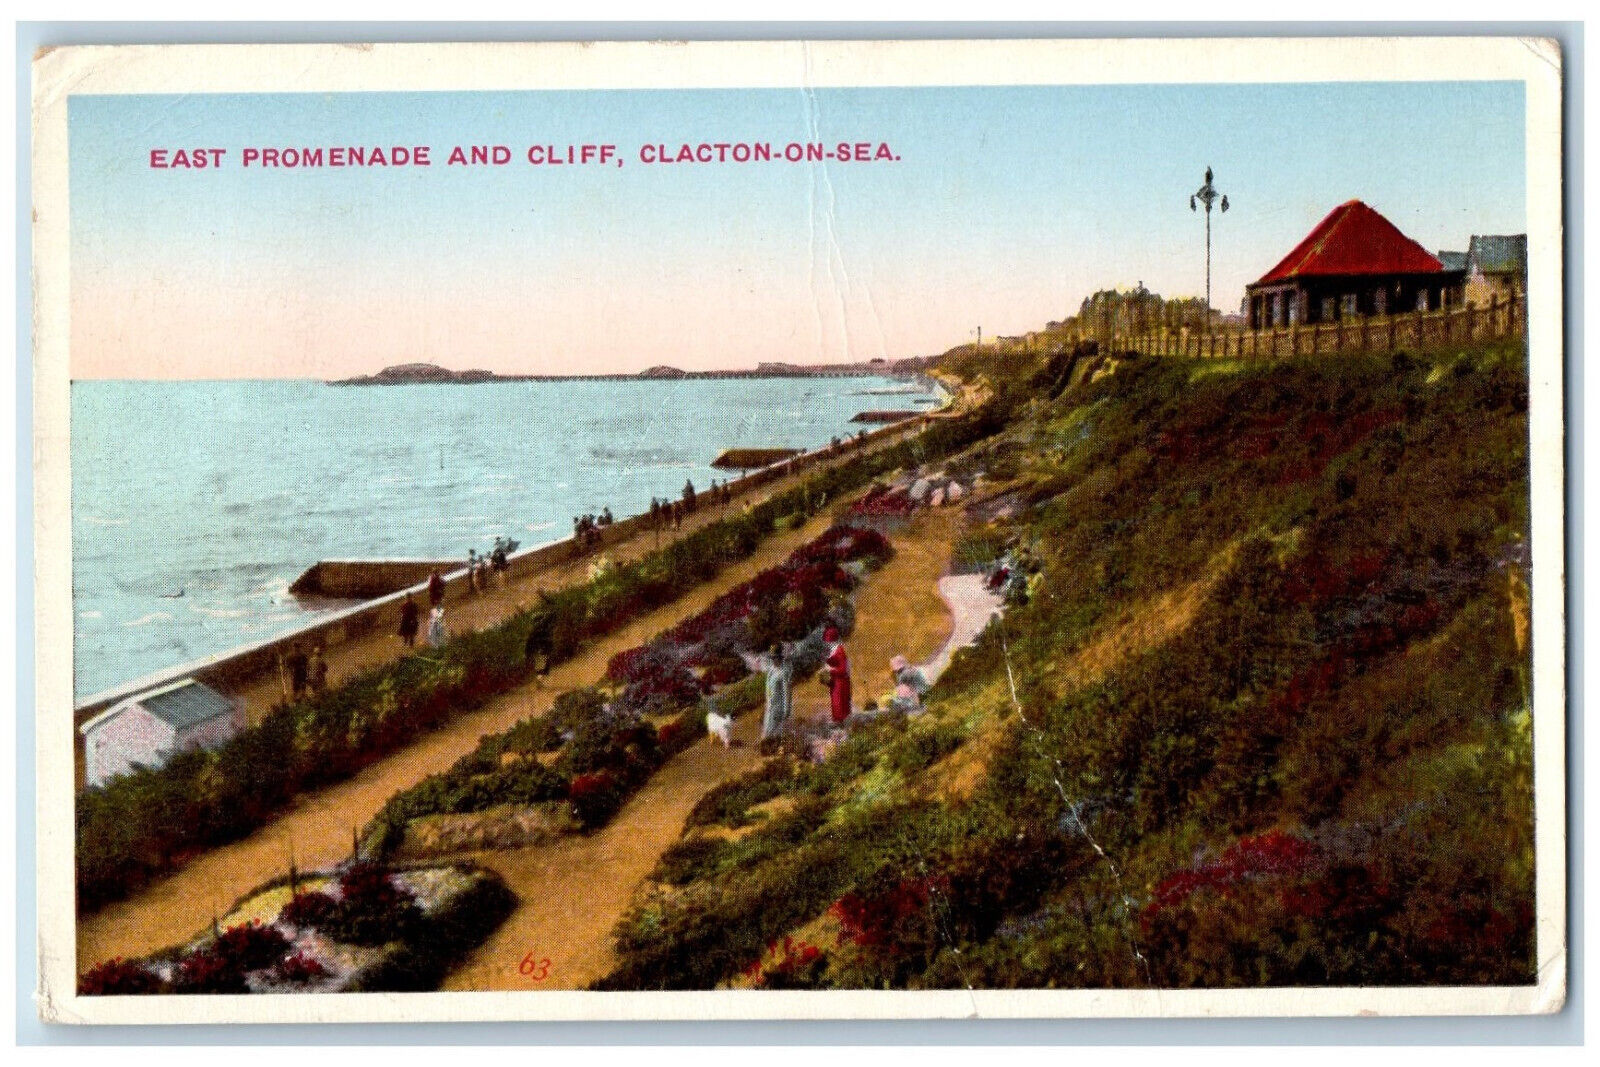 Clacton-On-Sea Essex England Postcard East Promenade and Cliff 1946 Vintage